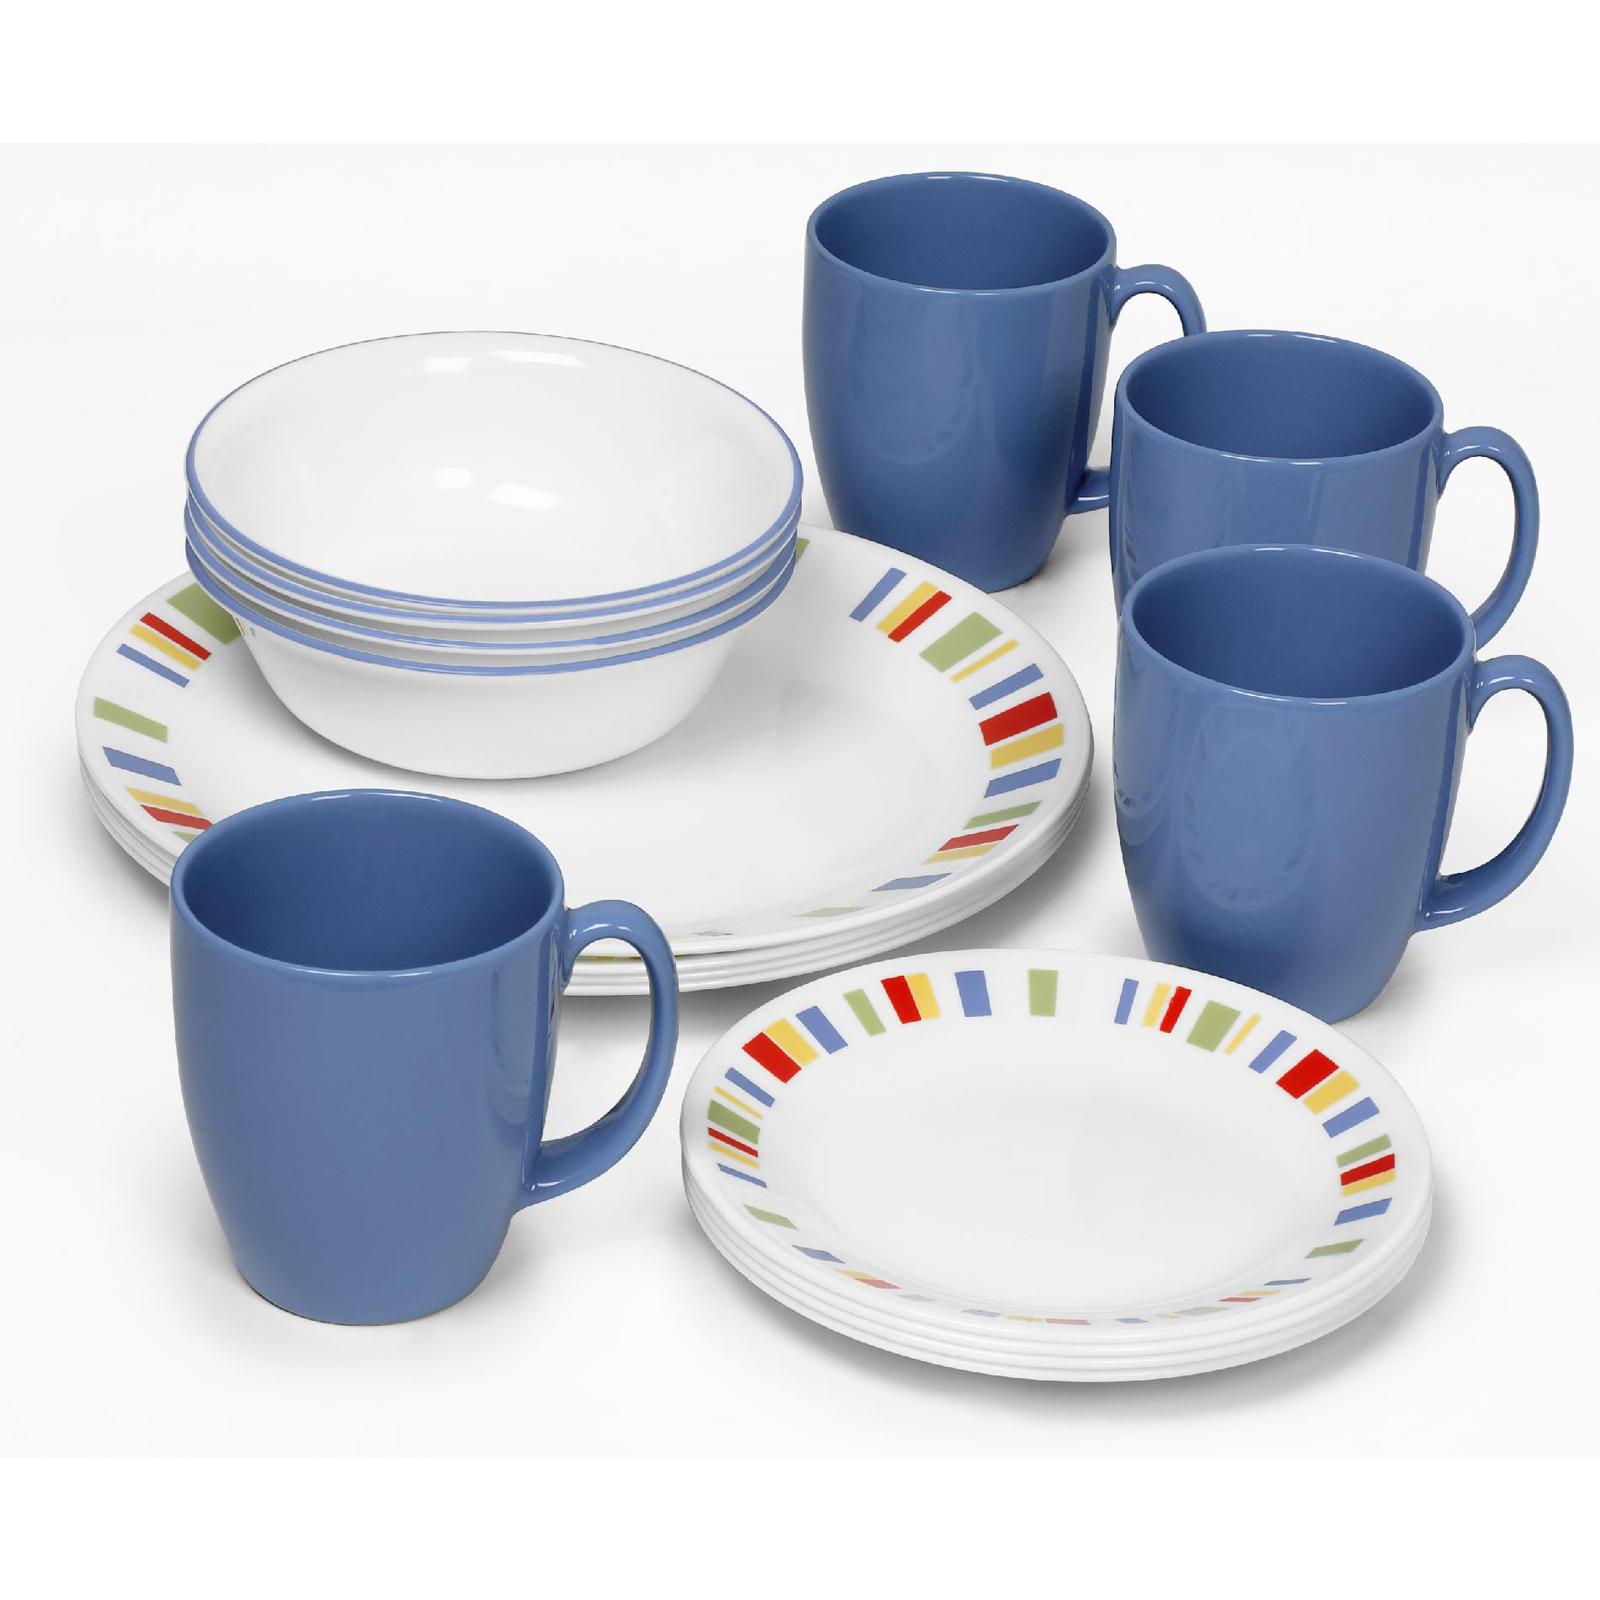 Corelle 16-Piece Dinnerware Set - Home - Dining & Entertaining - Tableware - Dinnerware Sets ...